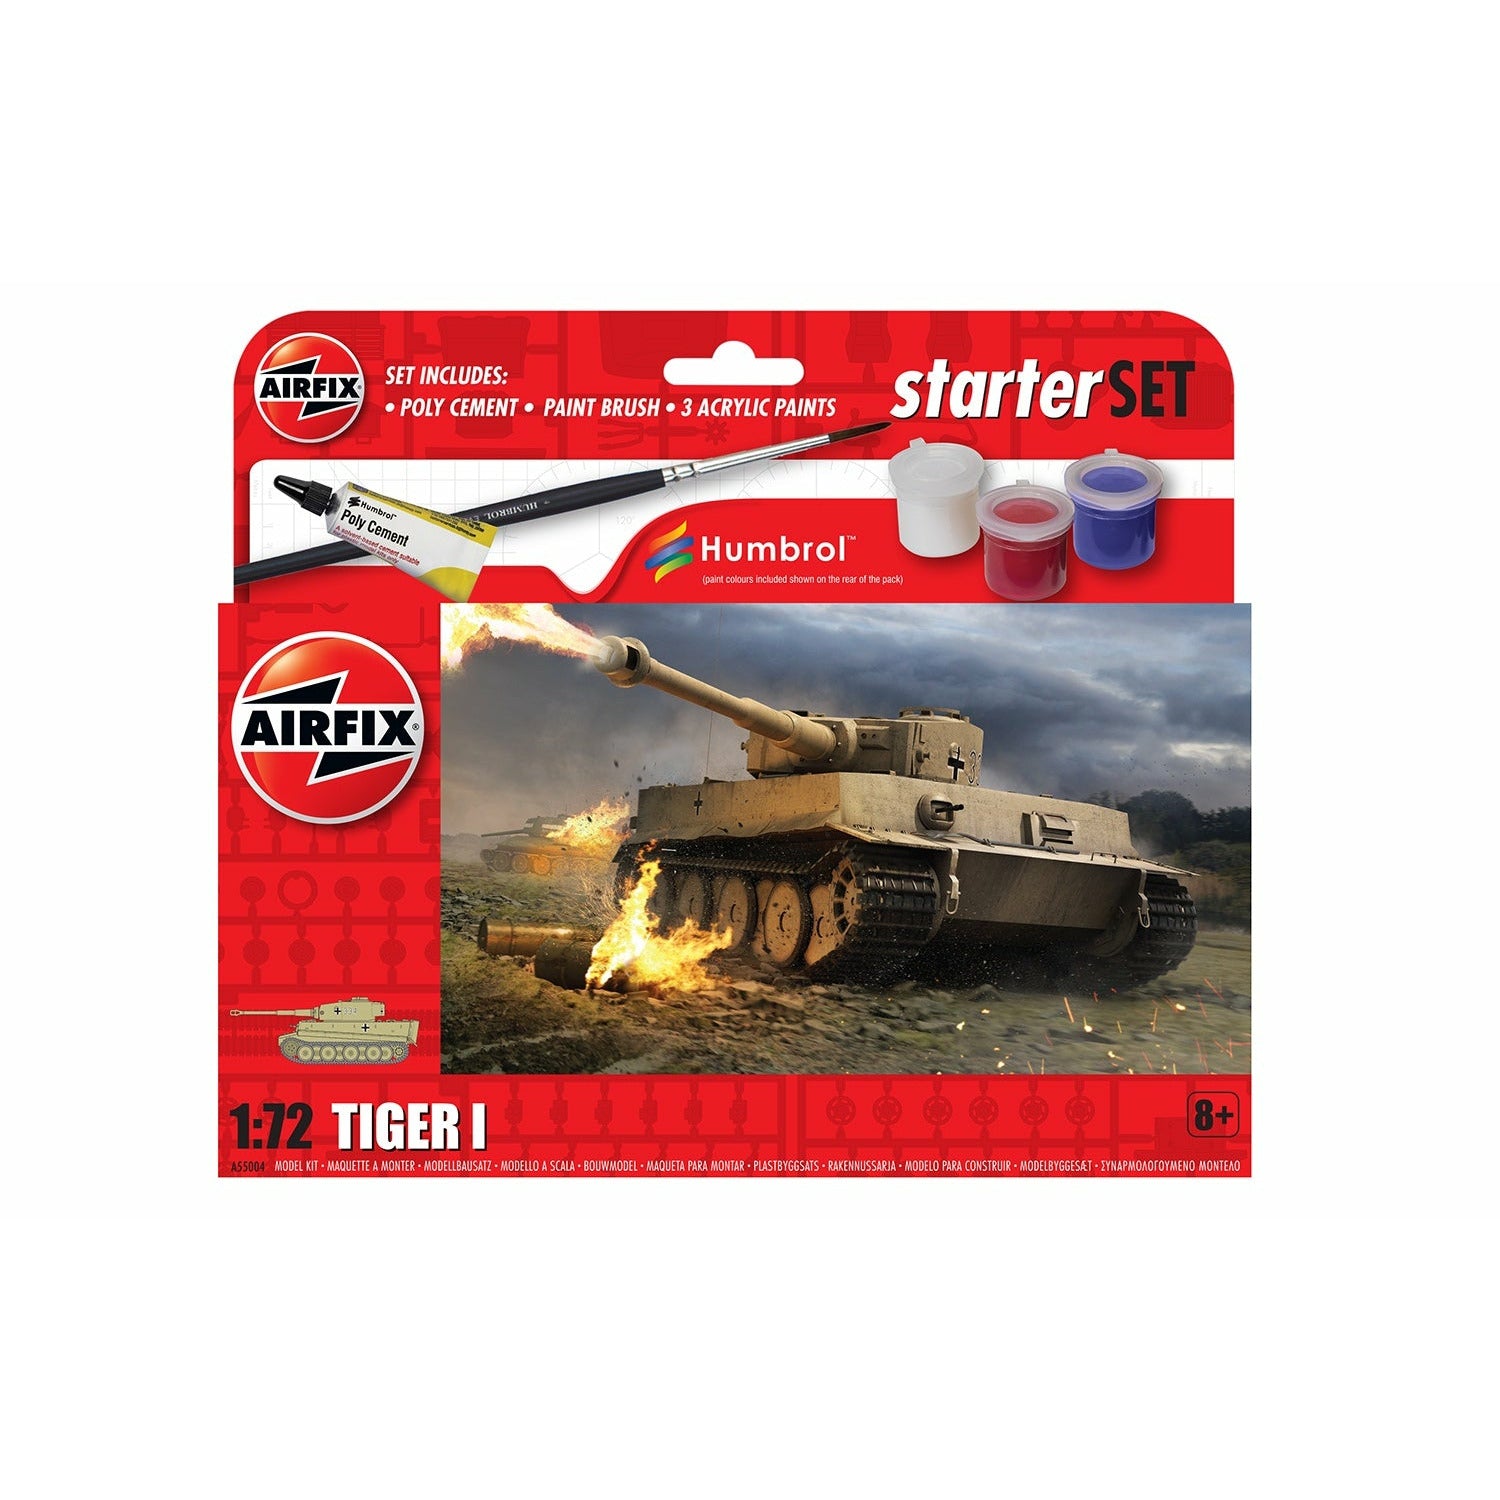 Tiger I Beginner Set #55004 by Airfix 1/72